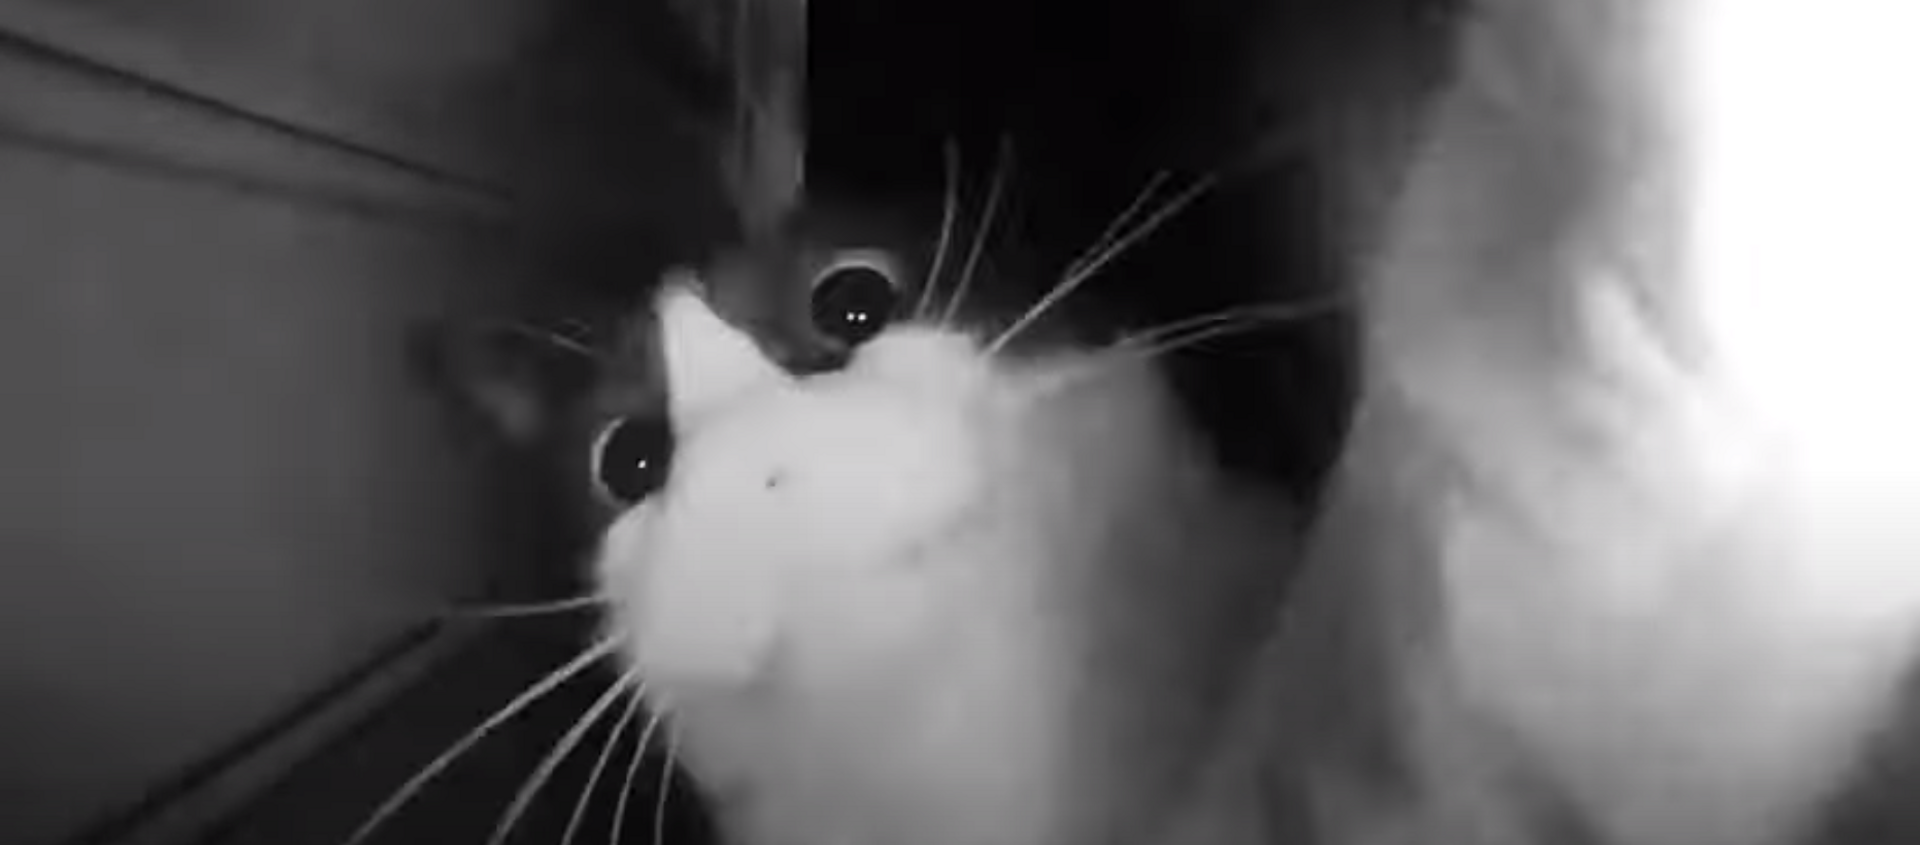 Un gato tocando el timbre  - Sputnik Mundo, 1920, 09.02.2021